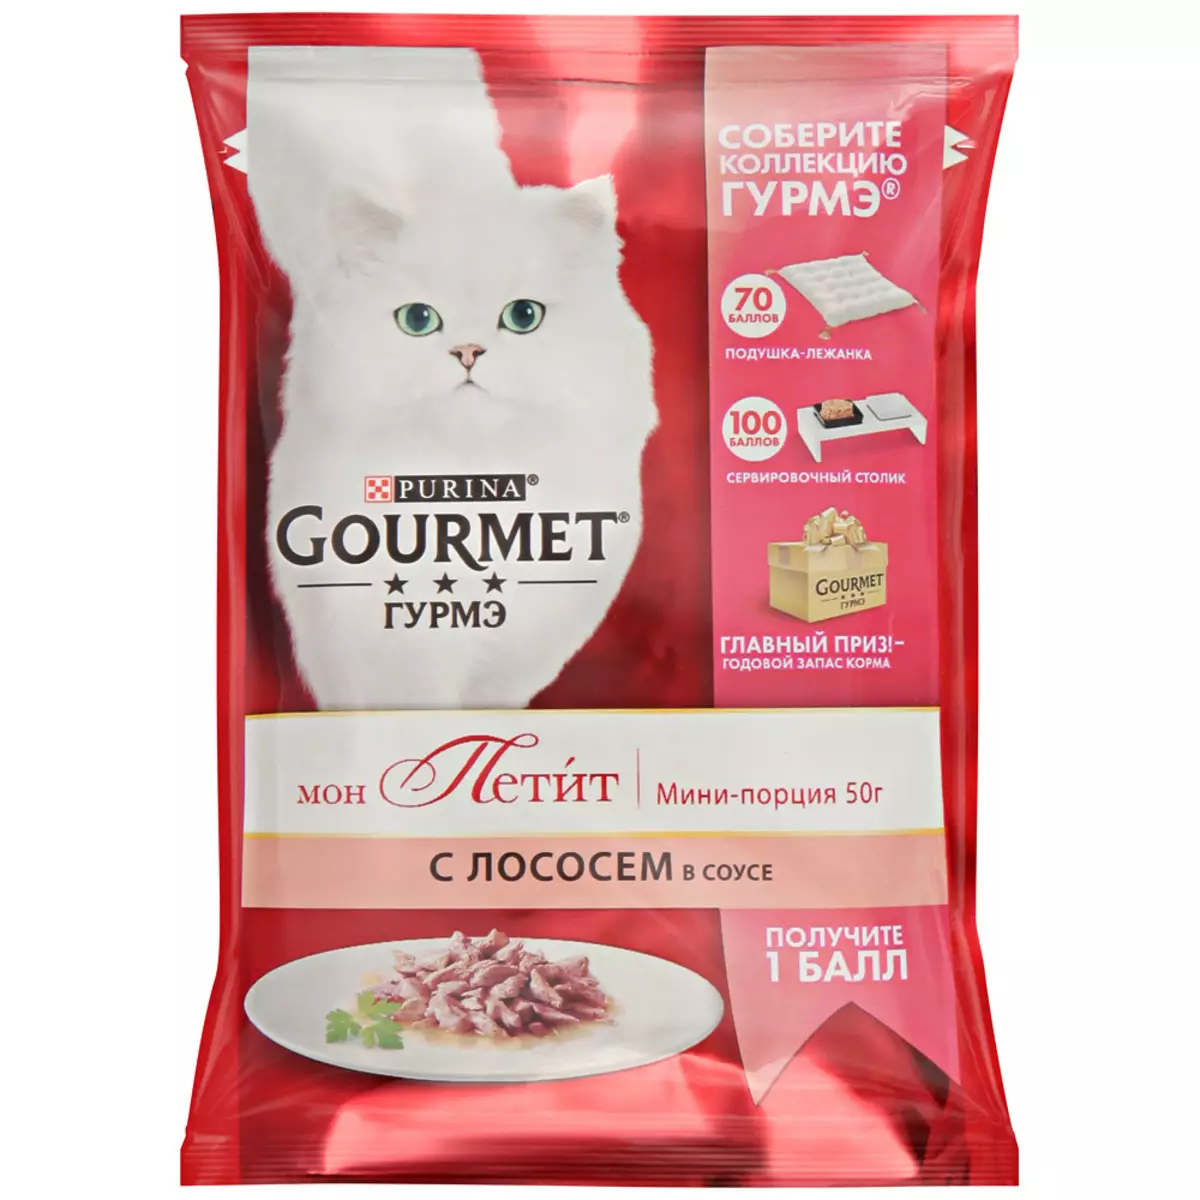 Gourmet: อาหารแมวและลูกแมว Purina, Pates เปียกและอาหารกระป๋องอื่น ๆ องค์ประกอบของพวกเขาความคิดเห็น 22711_38